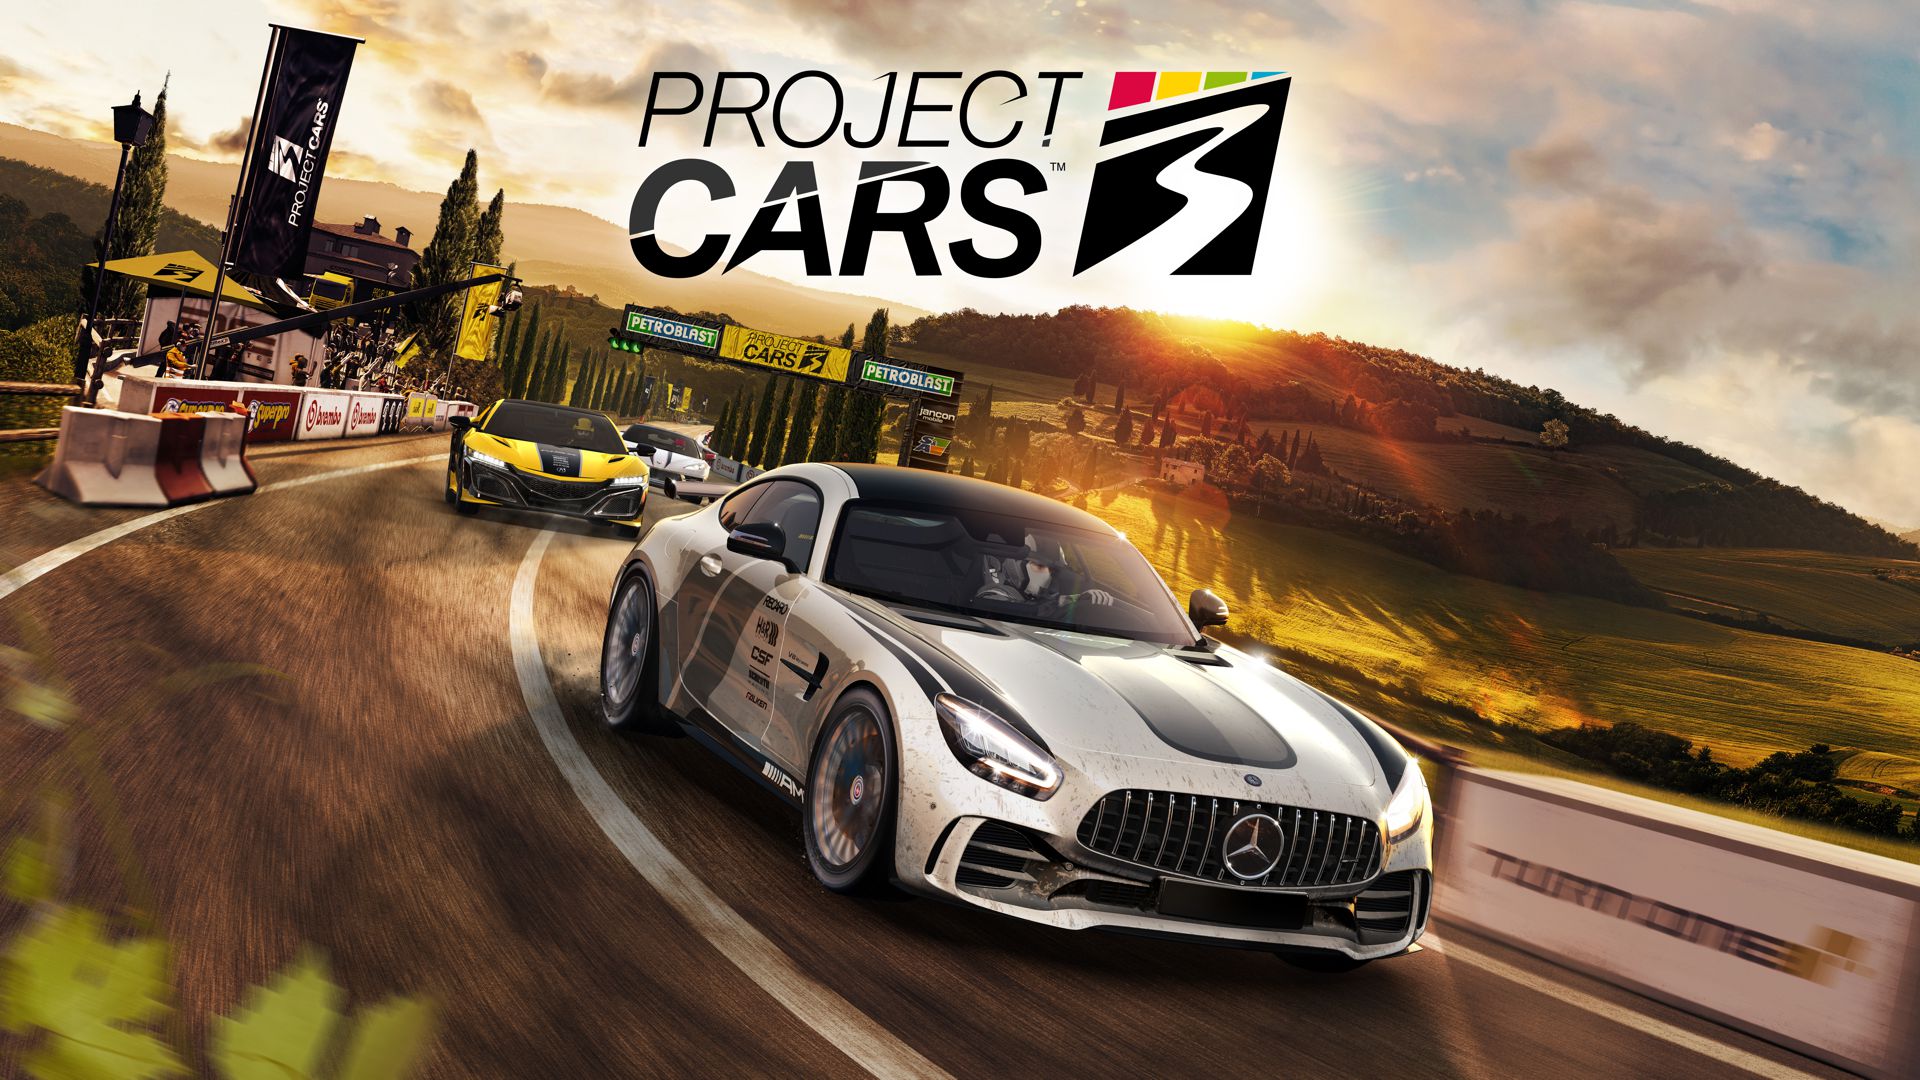 Project Cars 3 Principal